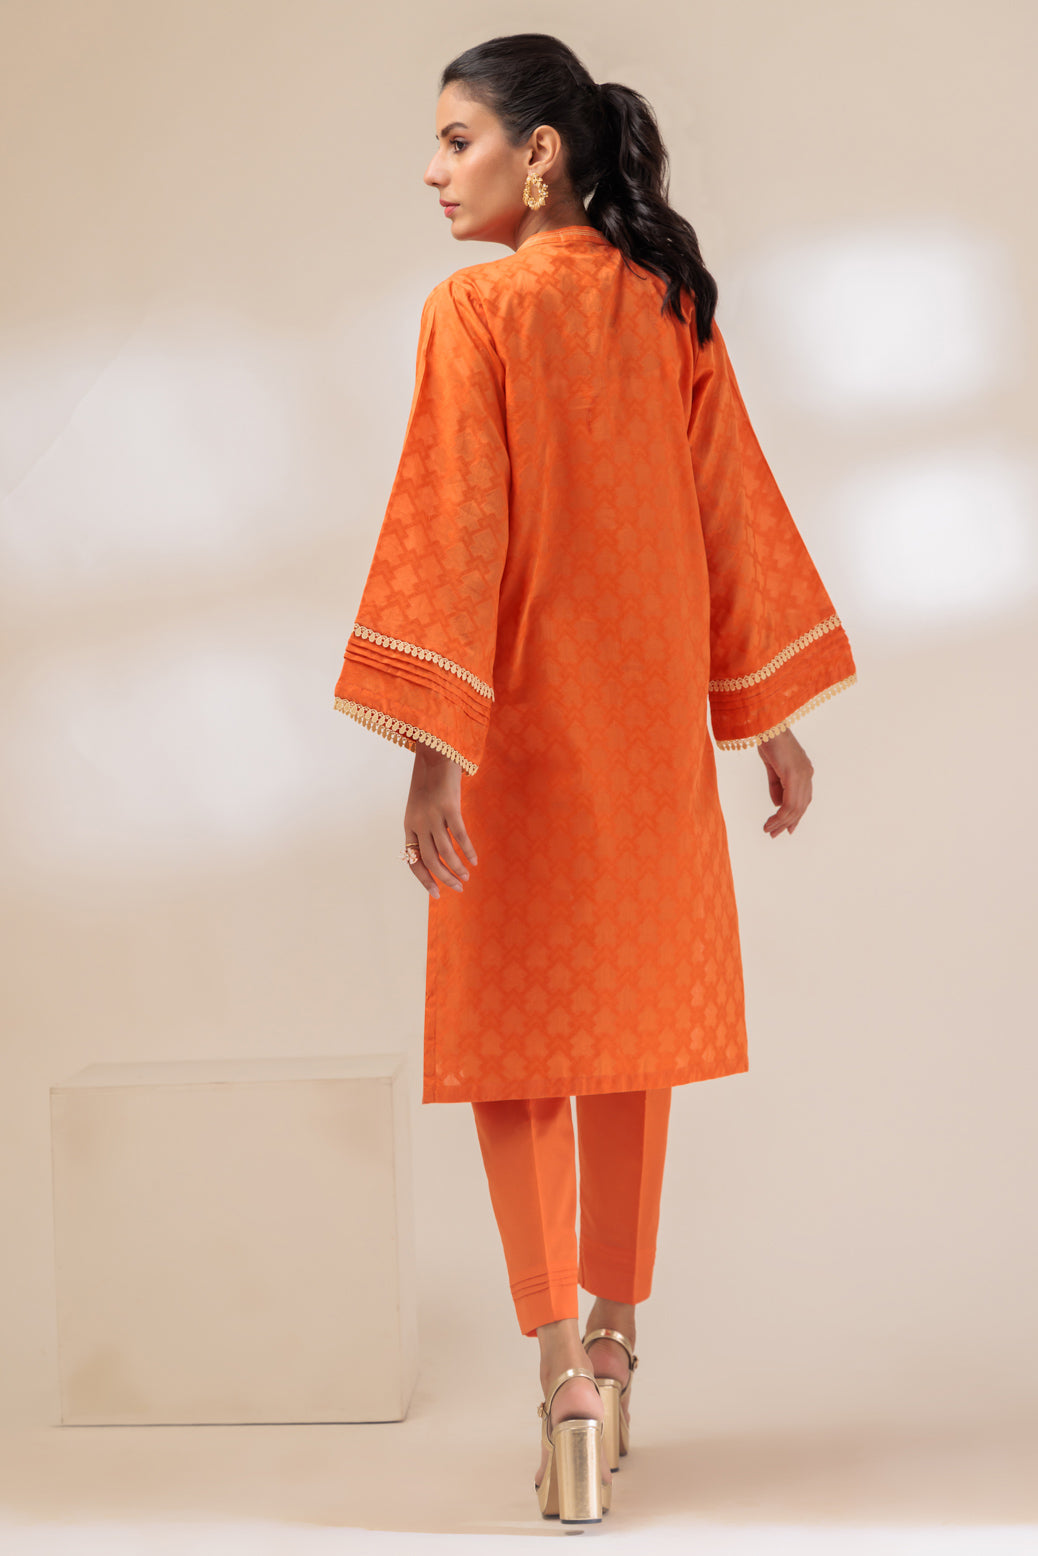 Dyed Orange 2 Piece Stitched Suit - Bonanza